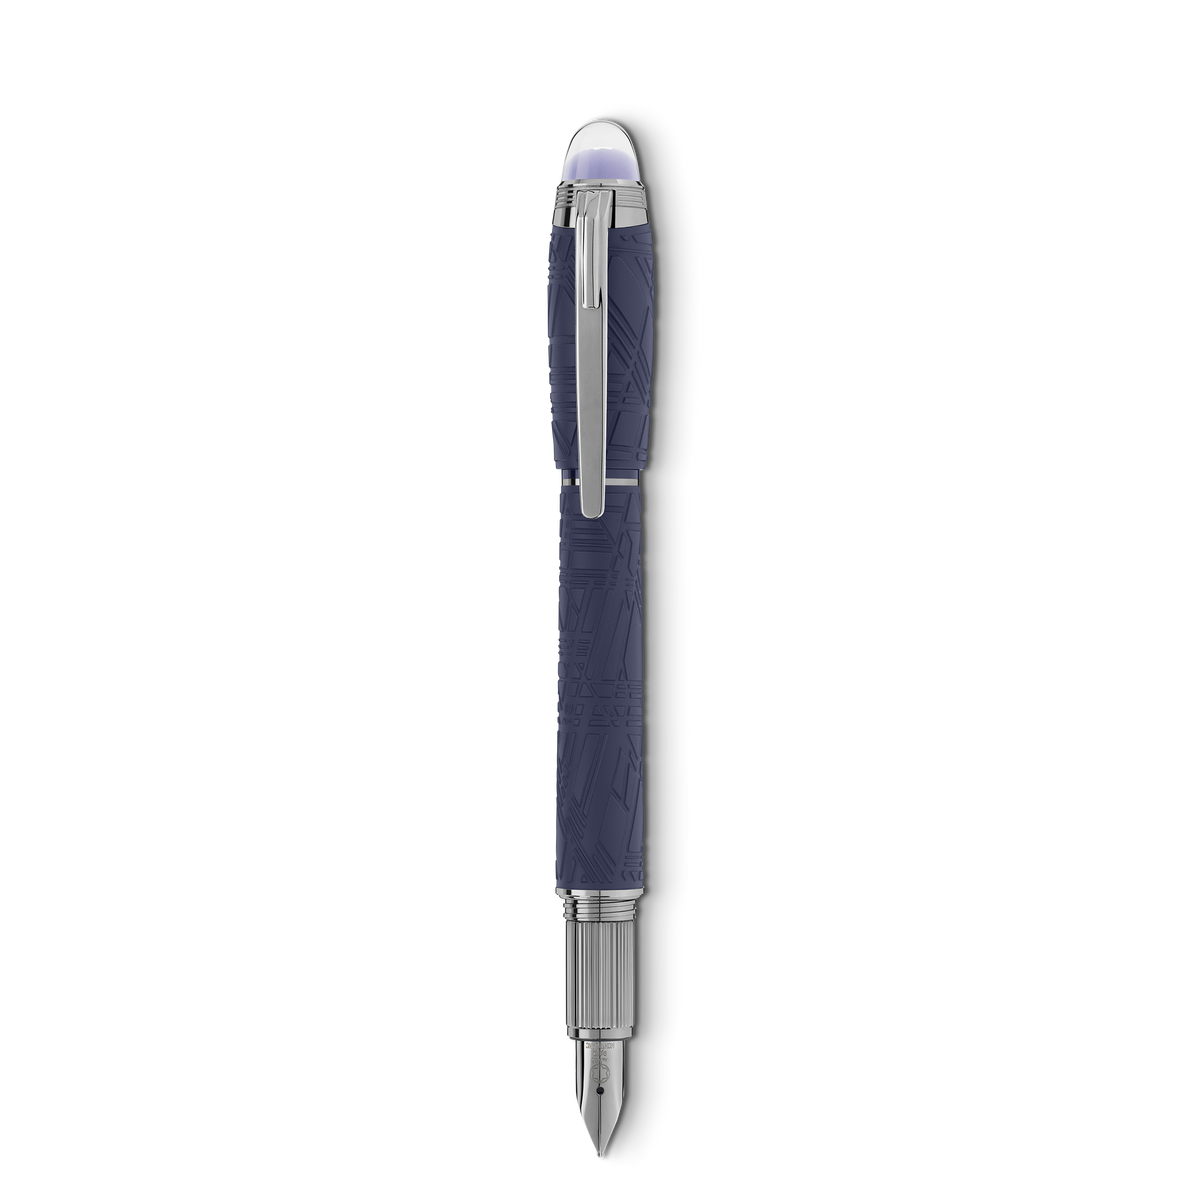 Starwalker SpaceBlue Resin Fountain Pen